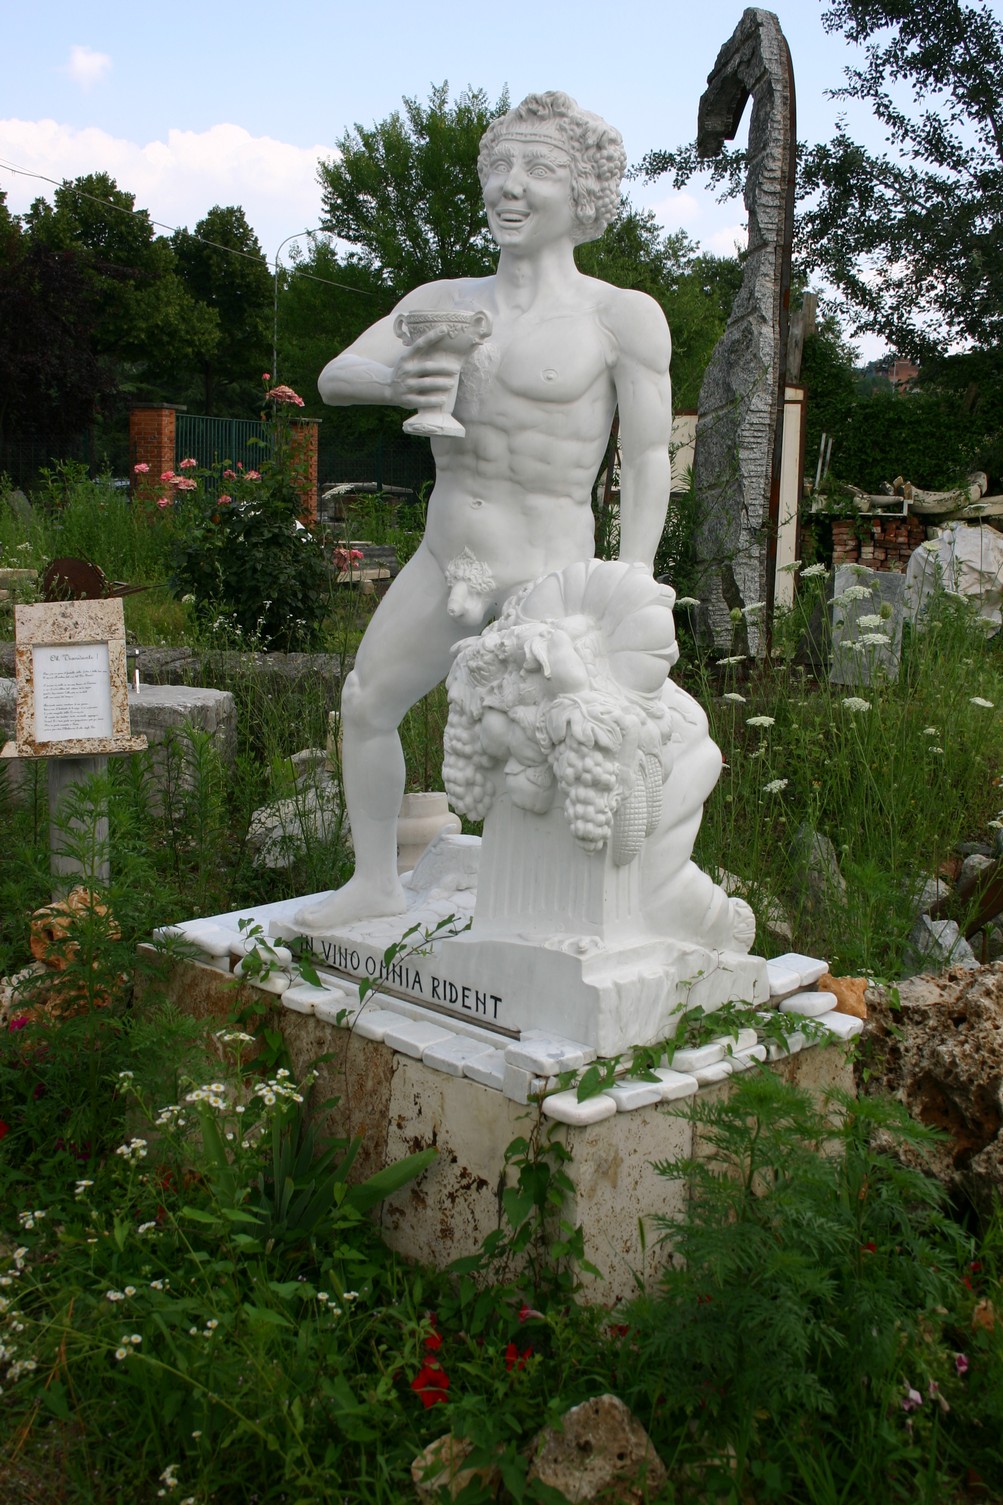 http://www.sculpturelanguzzi.it/images/cartella_sigplus_bacco/bacco3.jpg